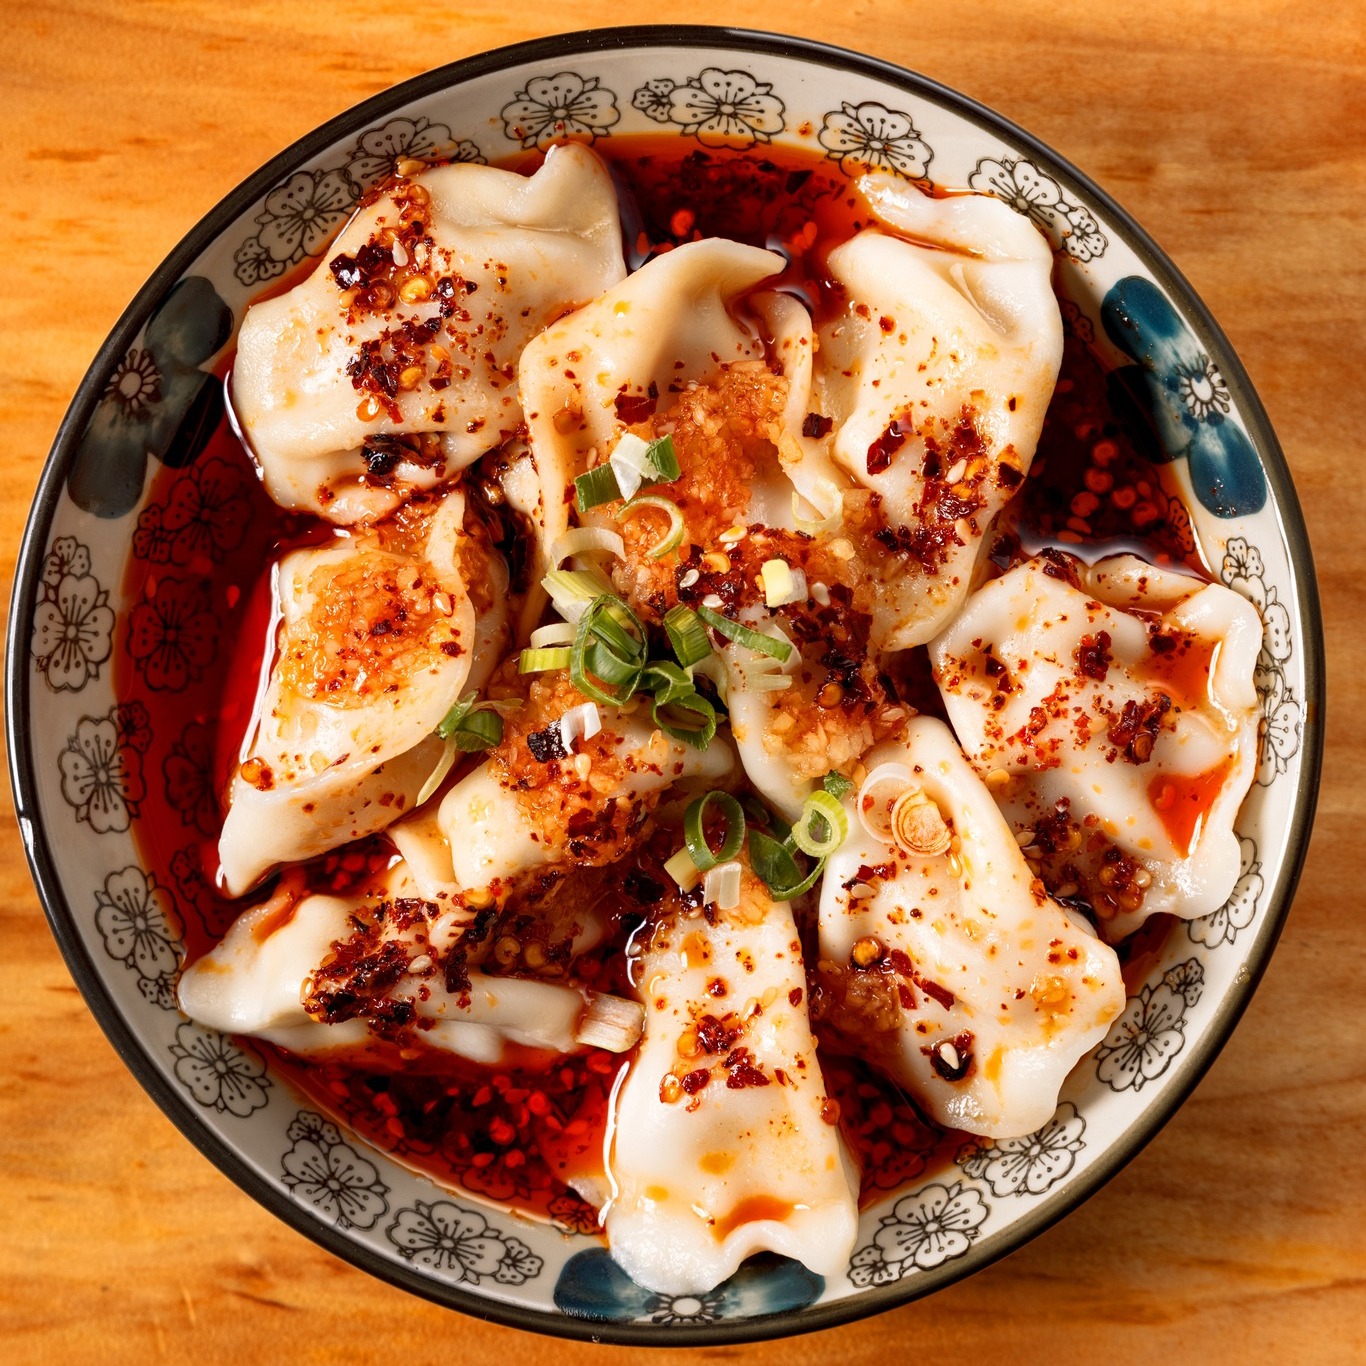 a bowl of dumplings in red sauce